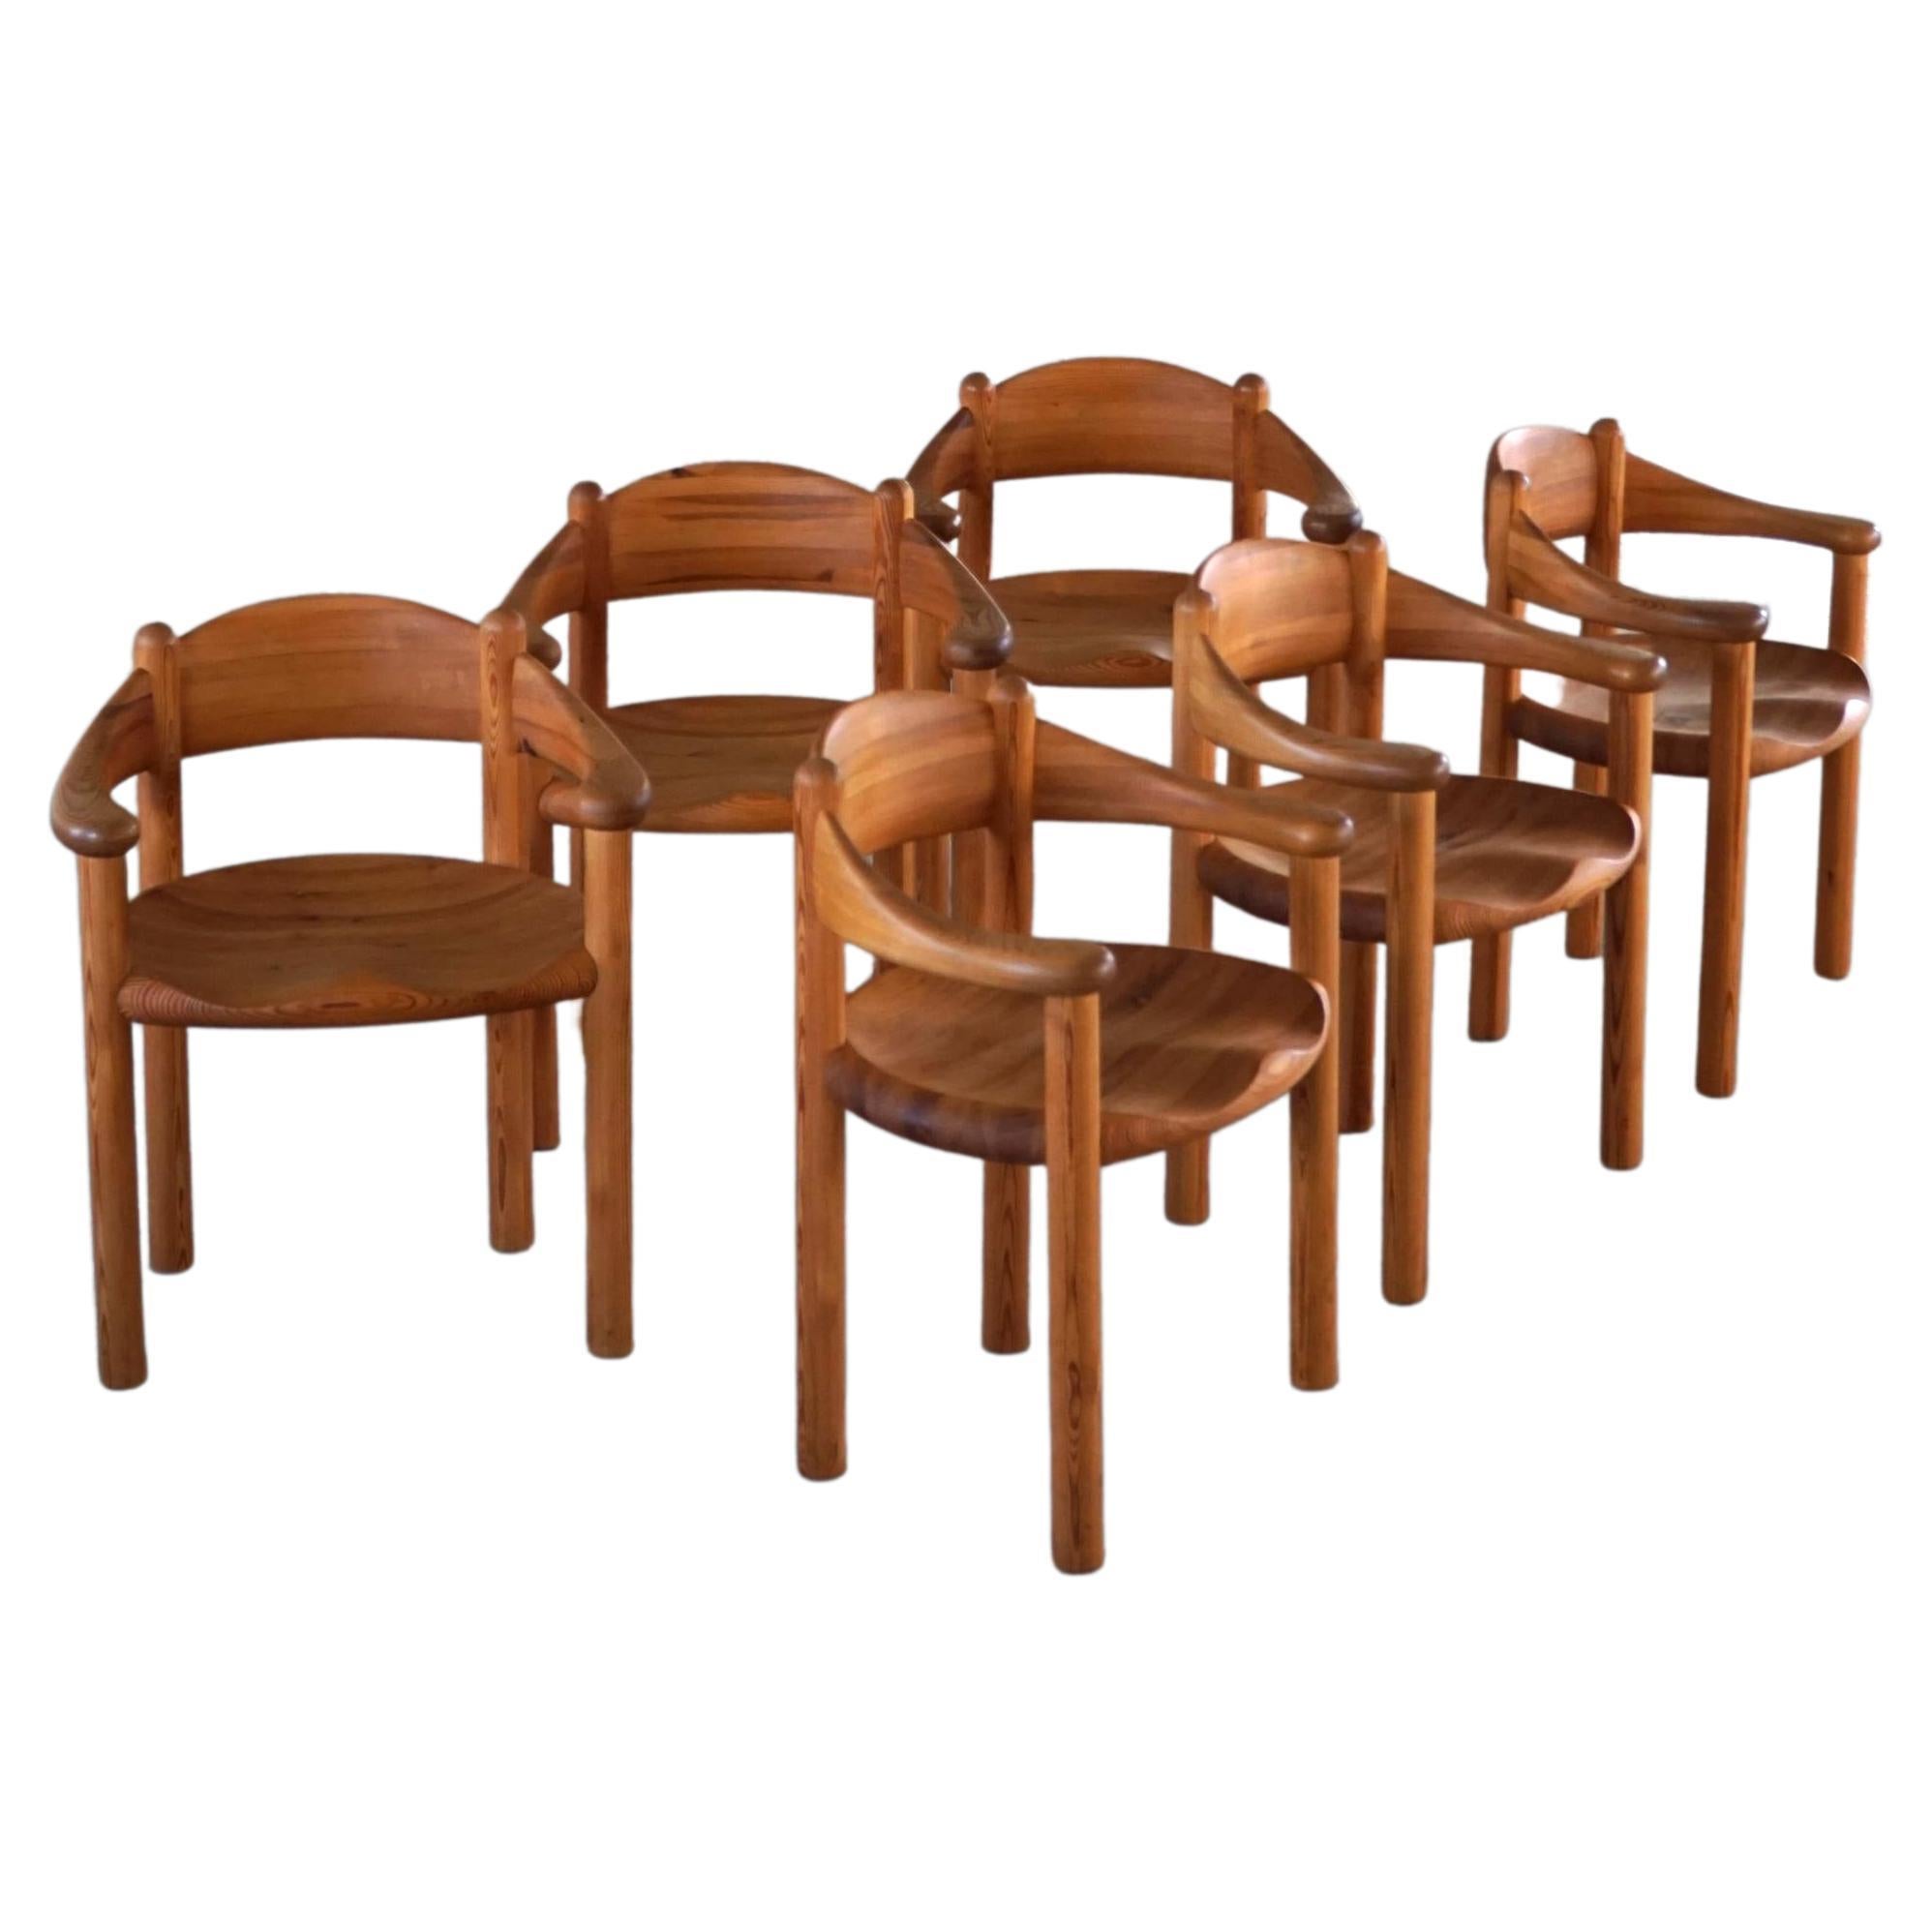 Rainer Daumiller, Set of 6 Armchairs in Solid Pine, Danish Modern Design, 1970s